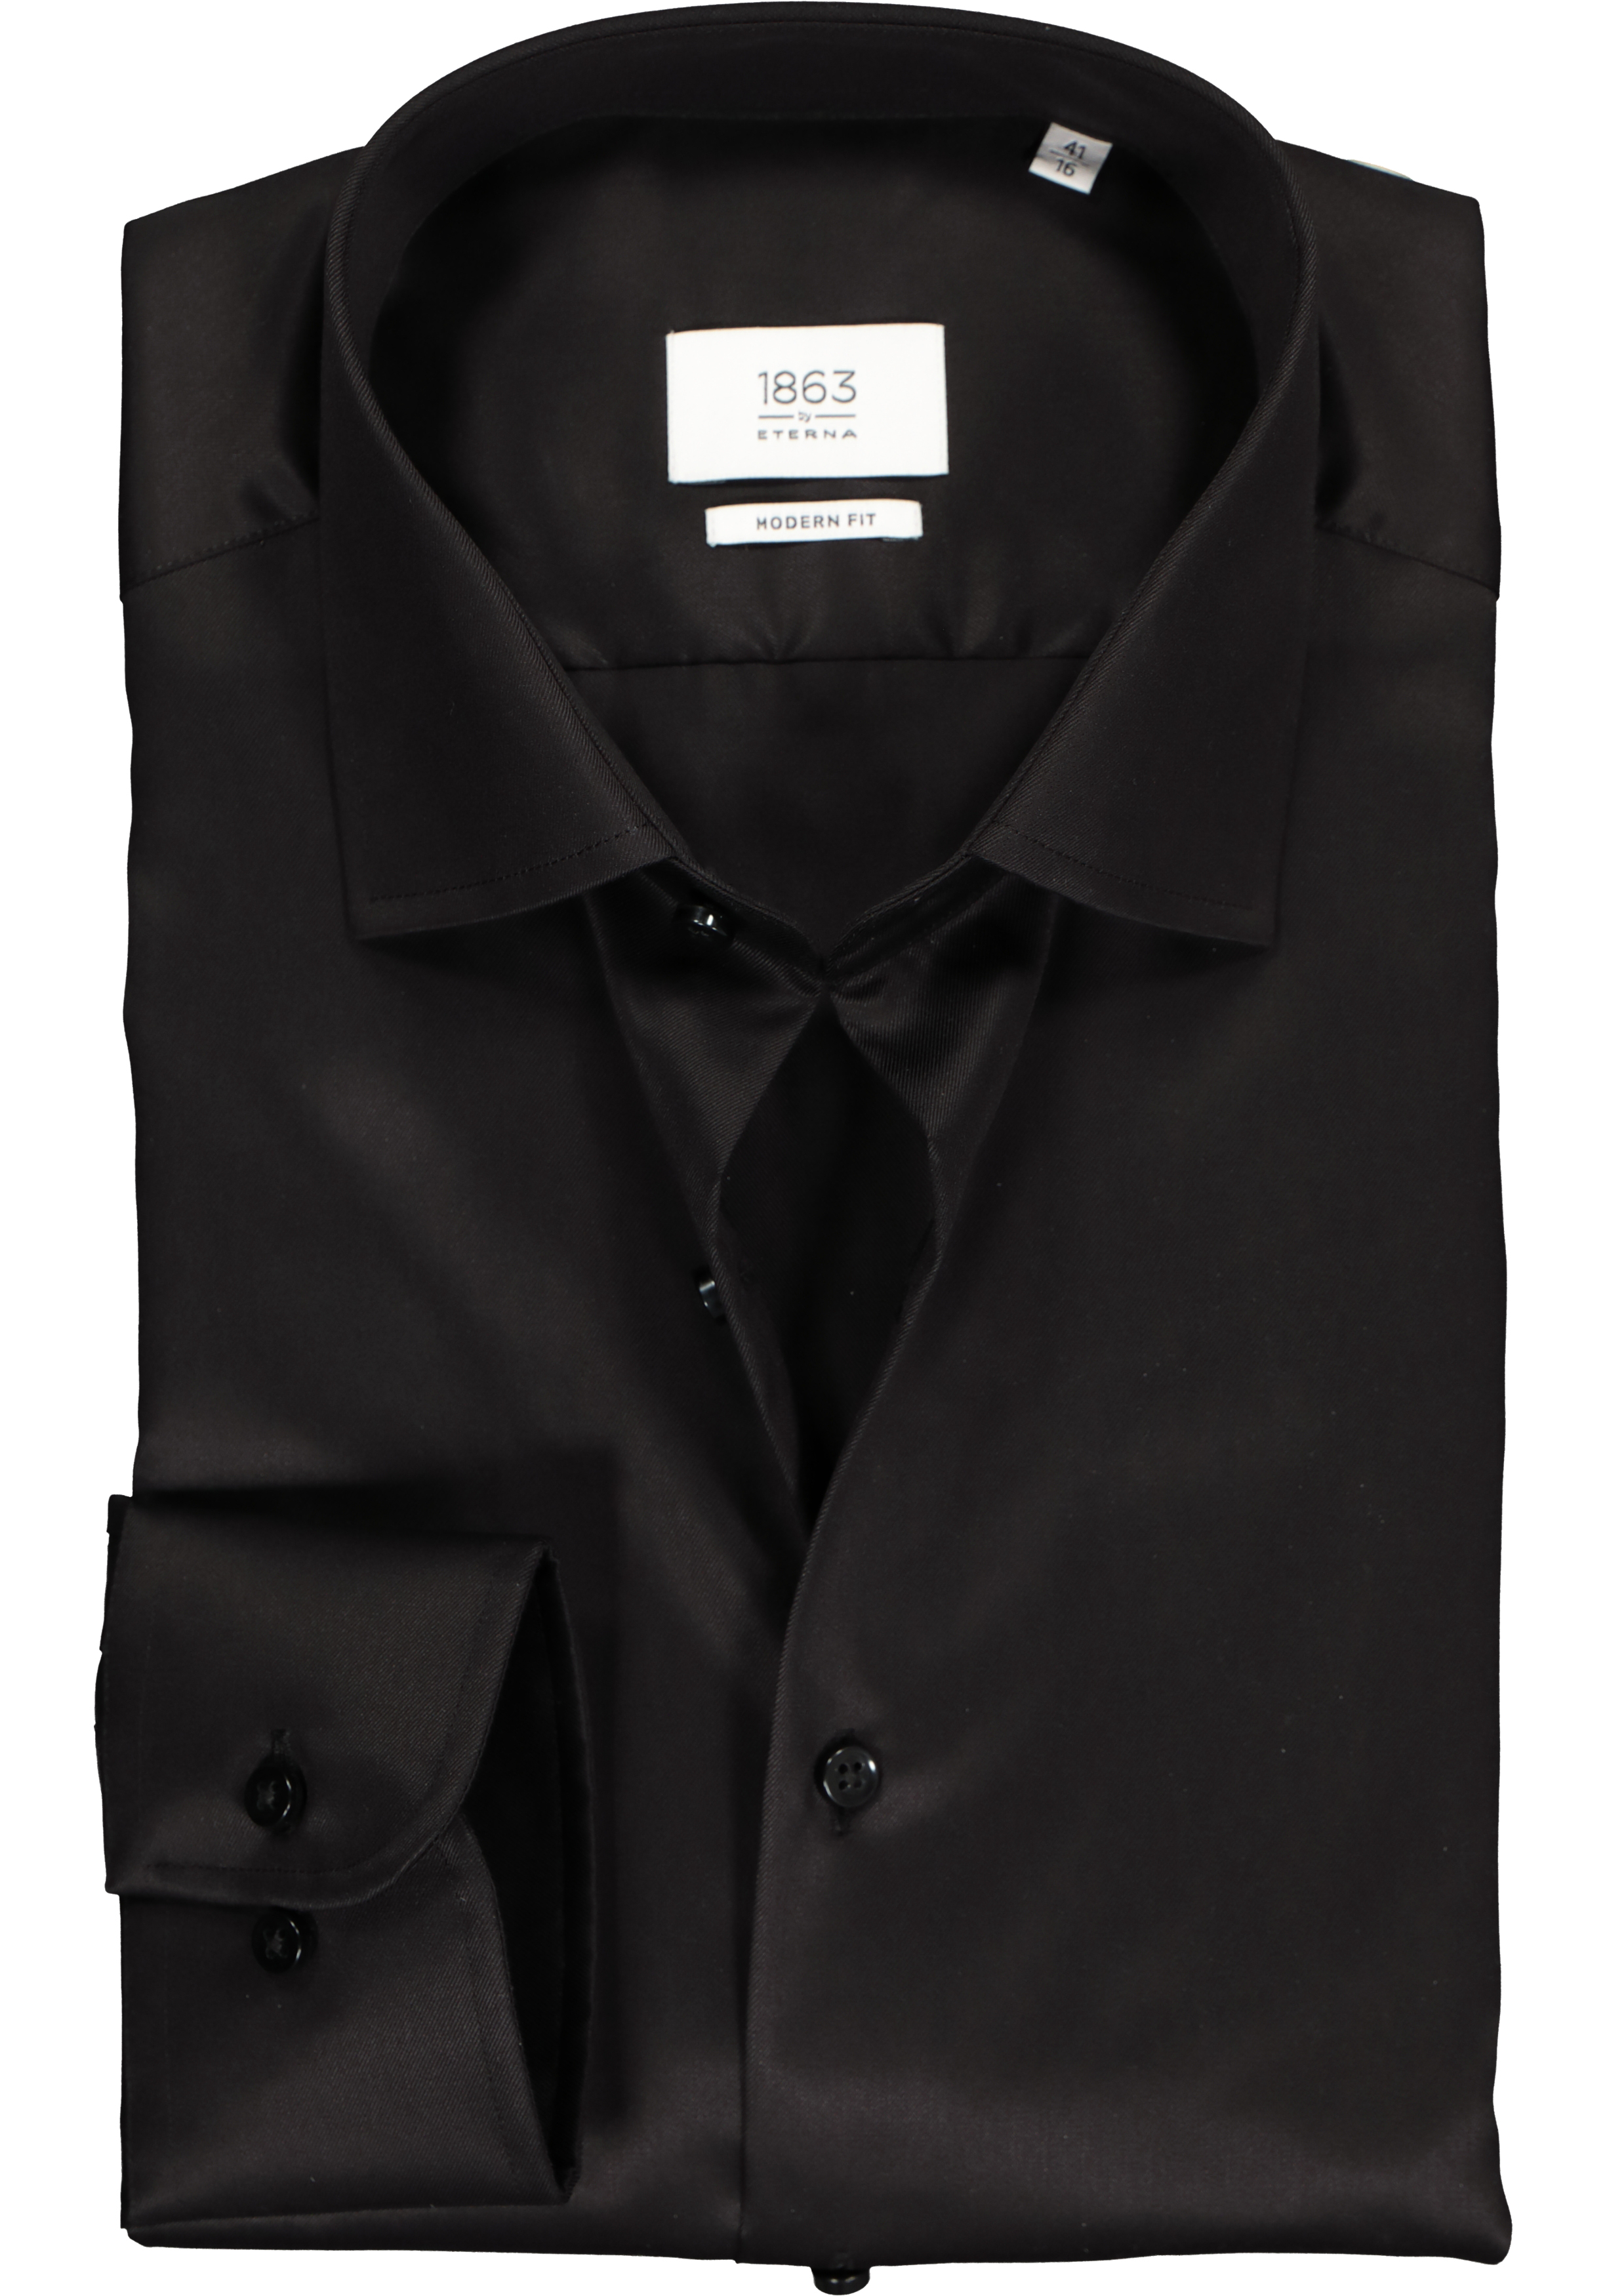 ETERNA 1863 modern fit premium overhemd, 2-ply twill heren overhemd, zwart